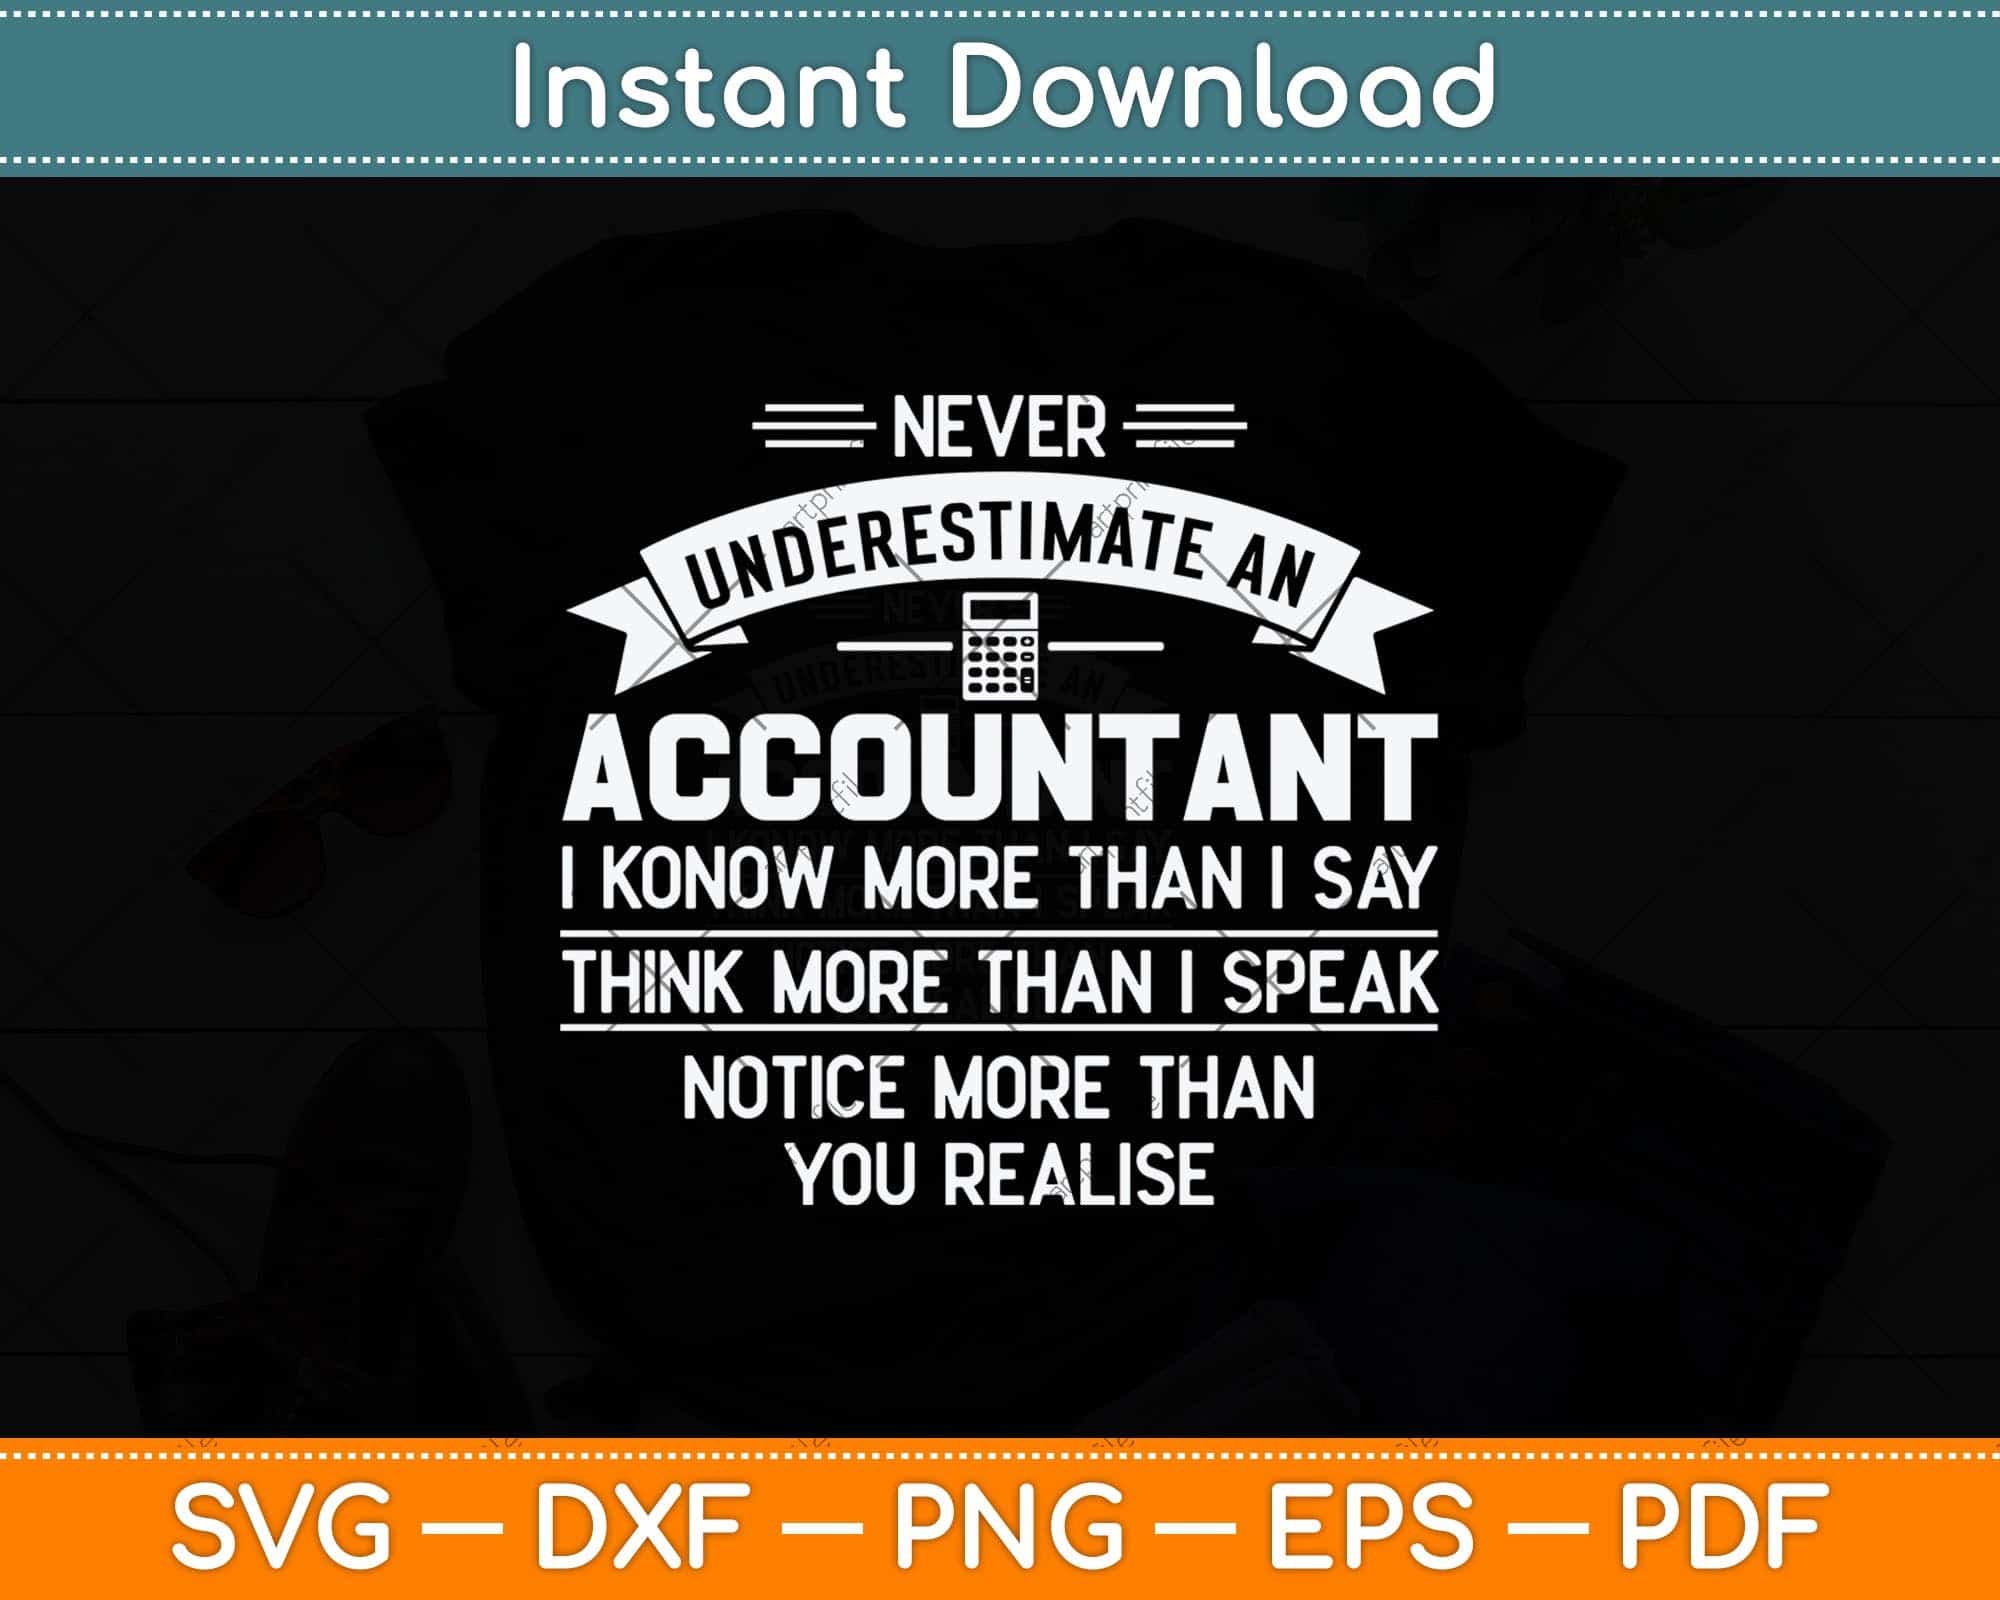 accountant funny